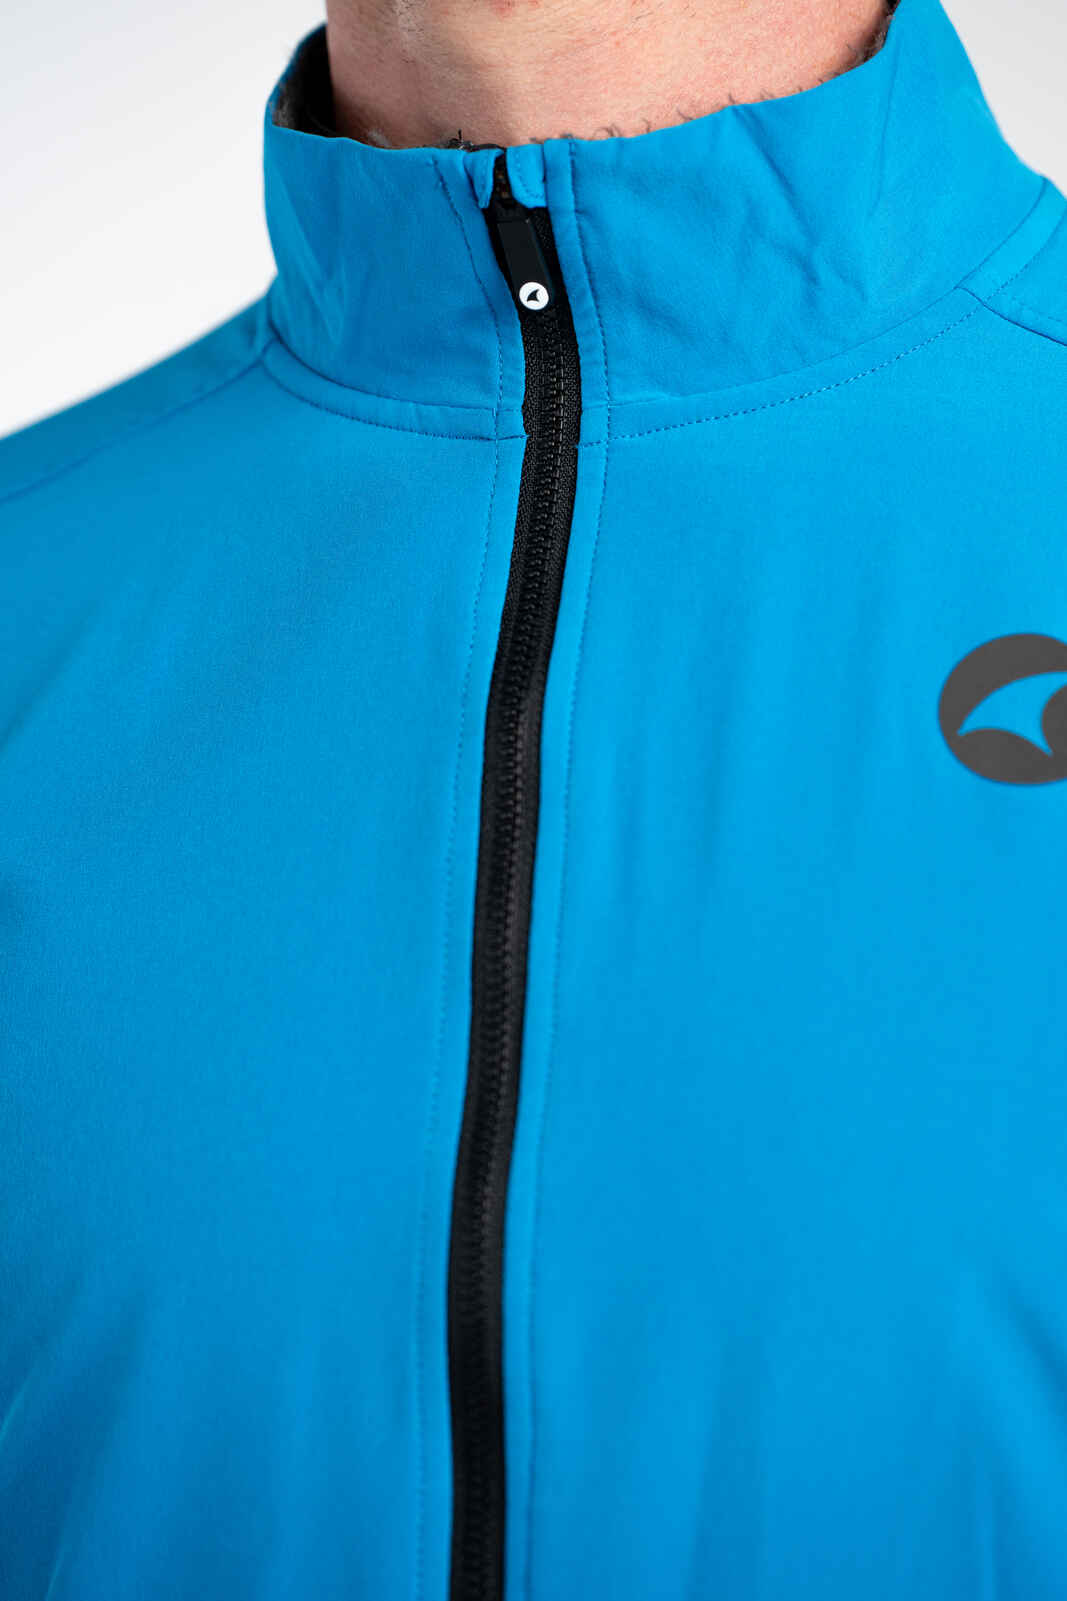 Men's Bright Blue Thermal Cycling Jacket - Zipper & Collar